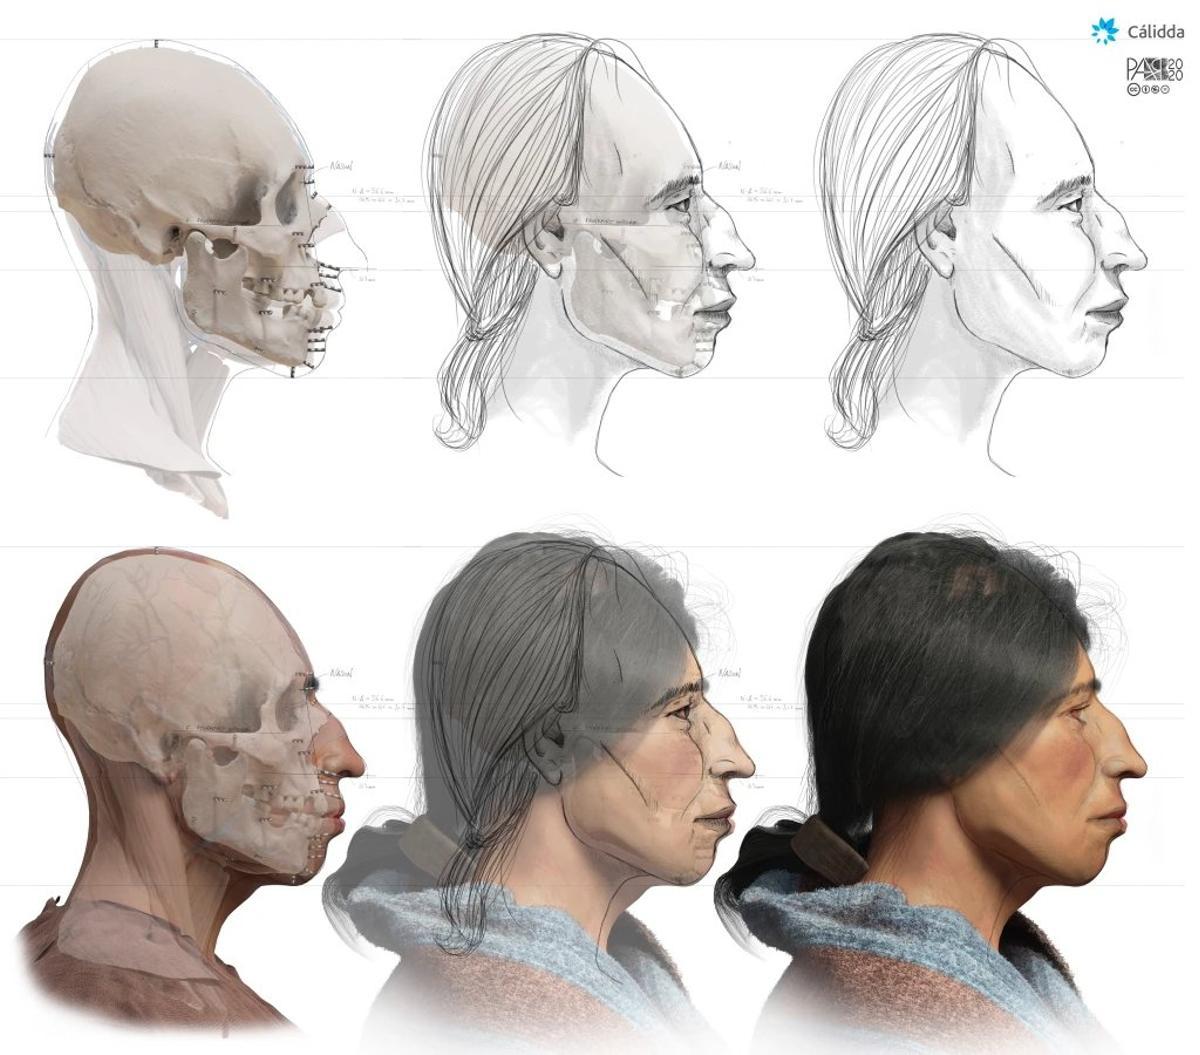 Reconstrucción facial con ciencia forense